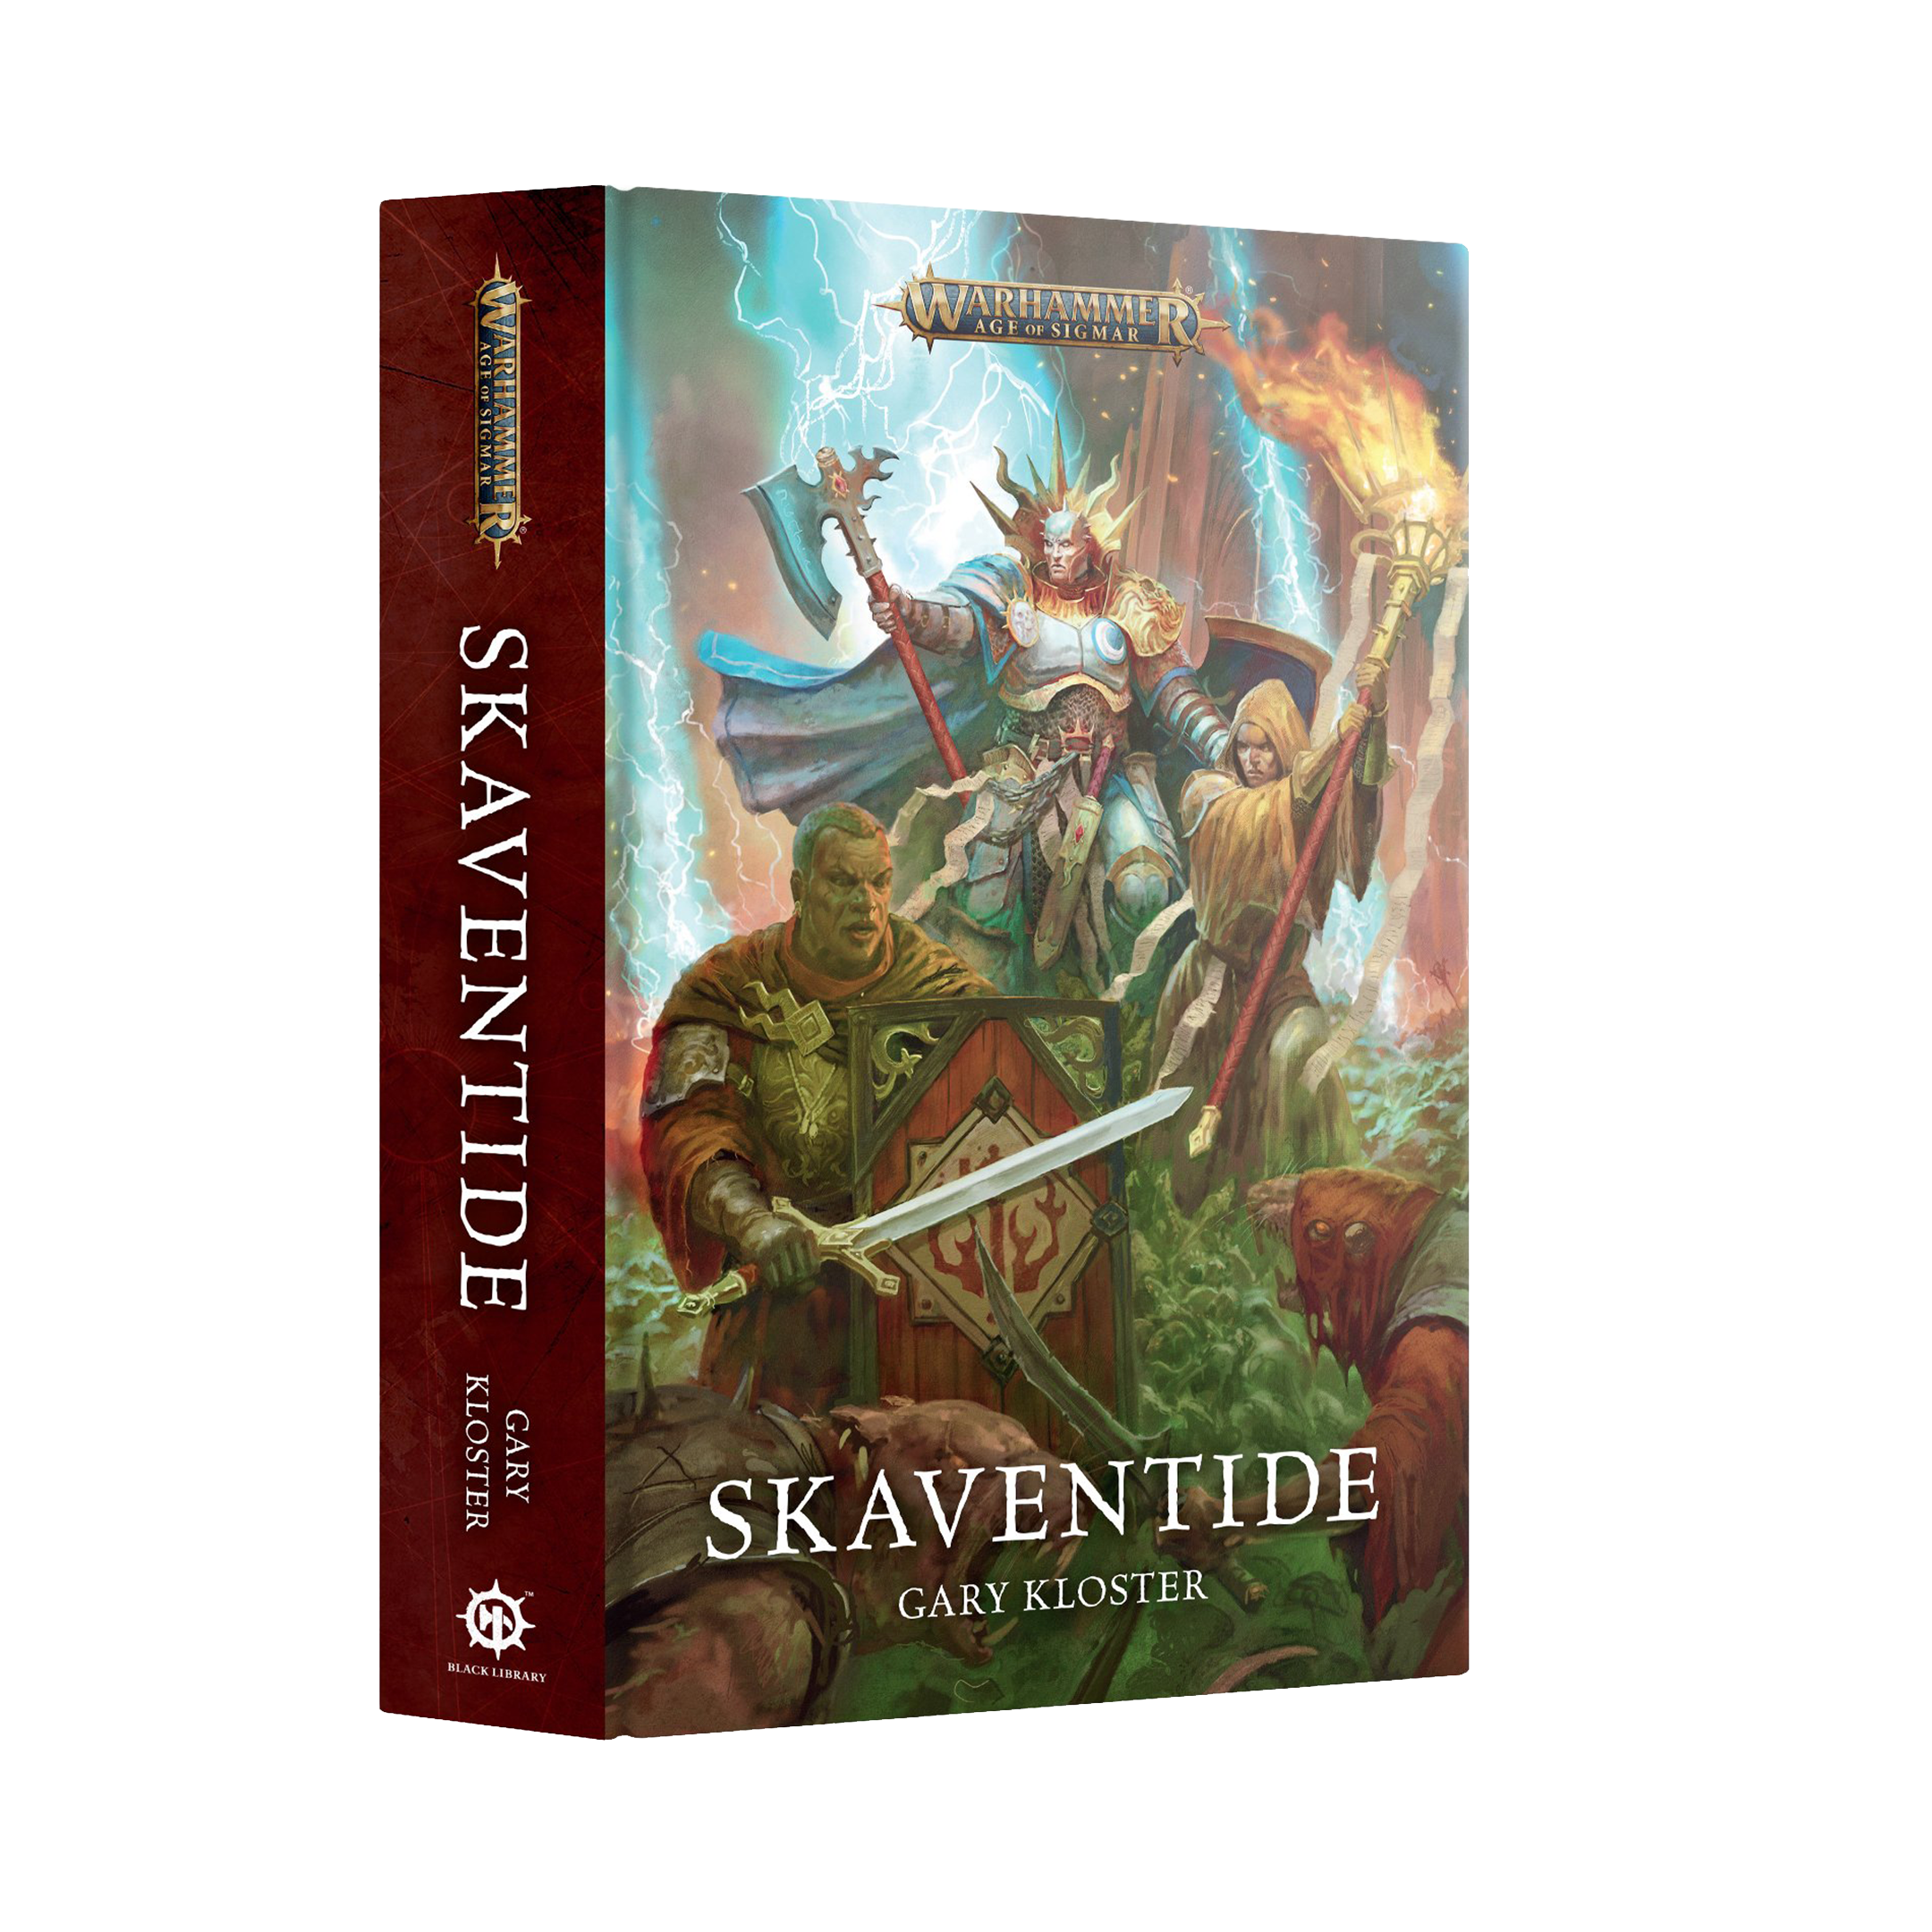 Skaventide: The Novel